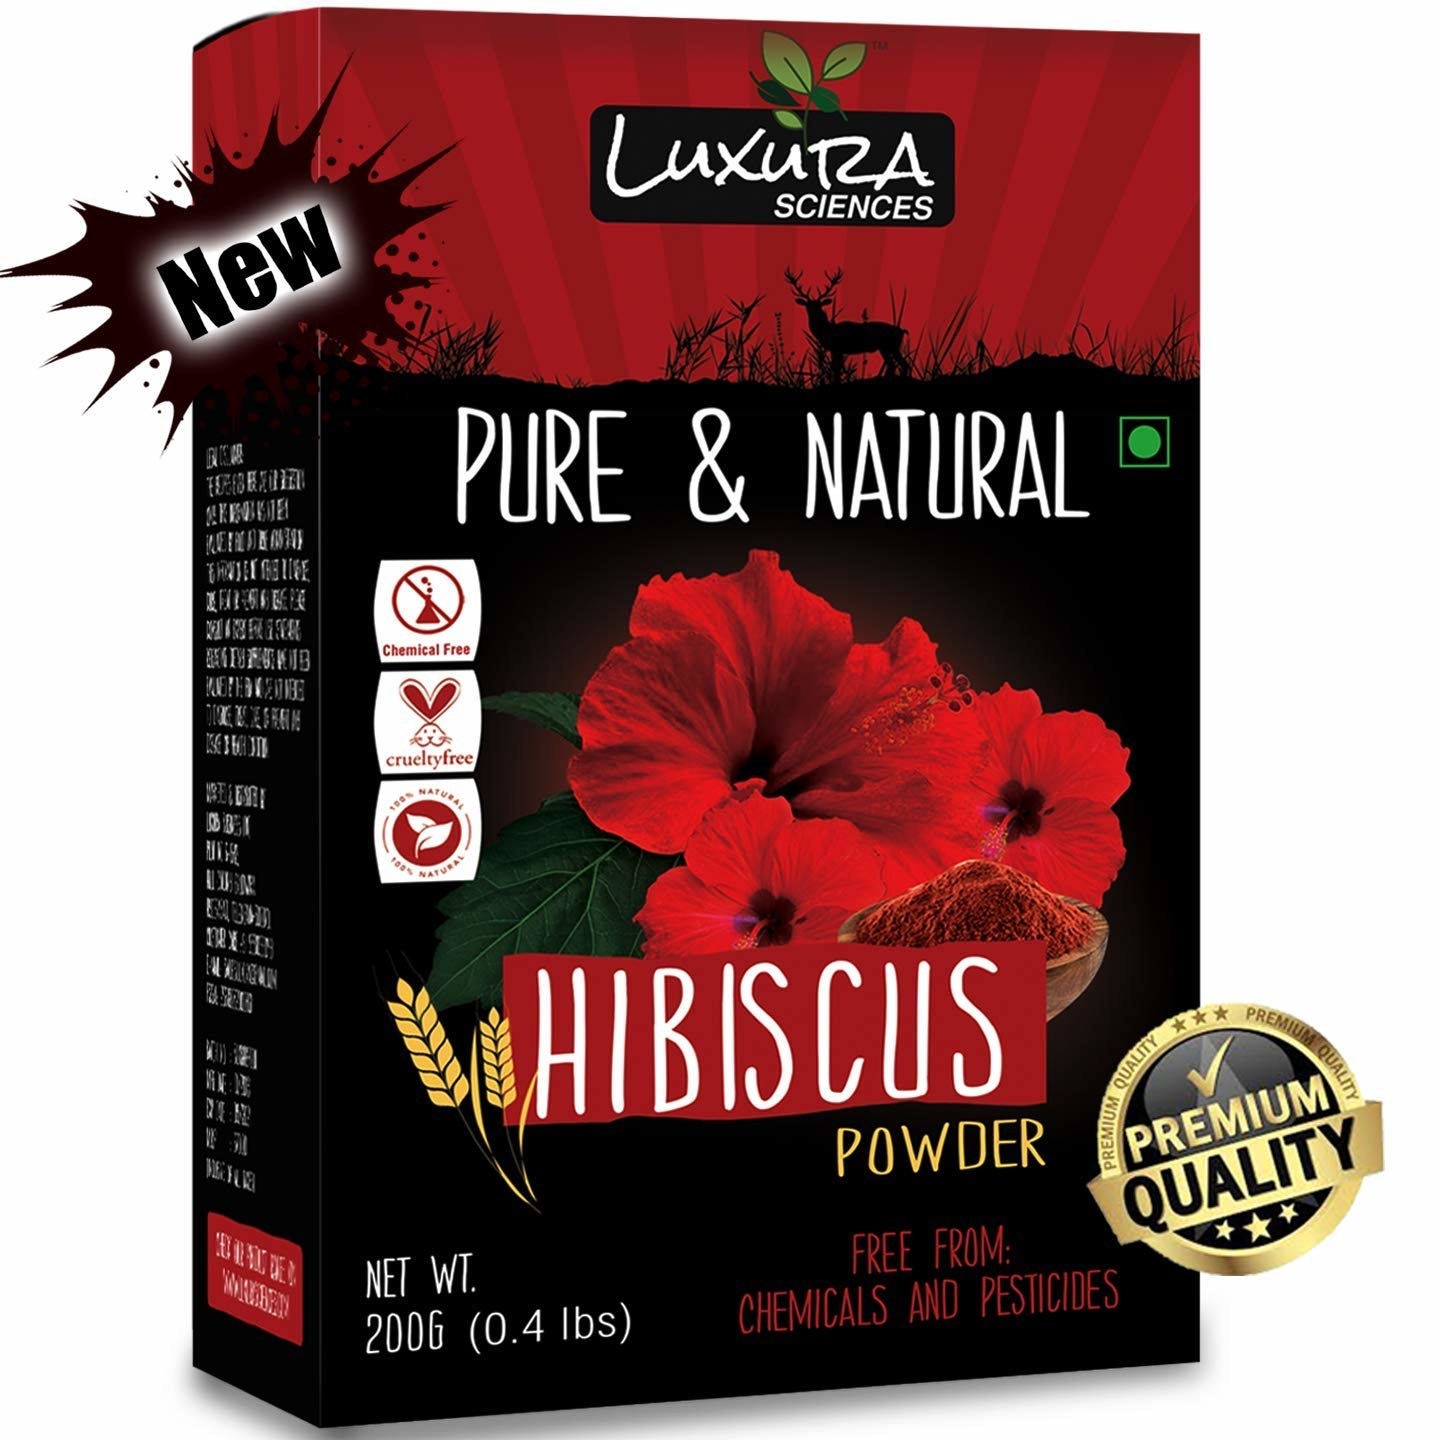 A box of hibiscus powder 